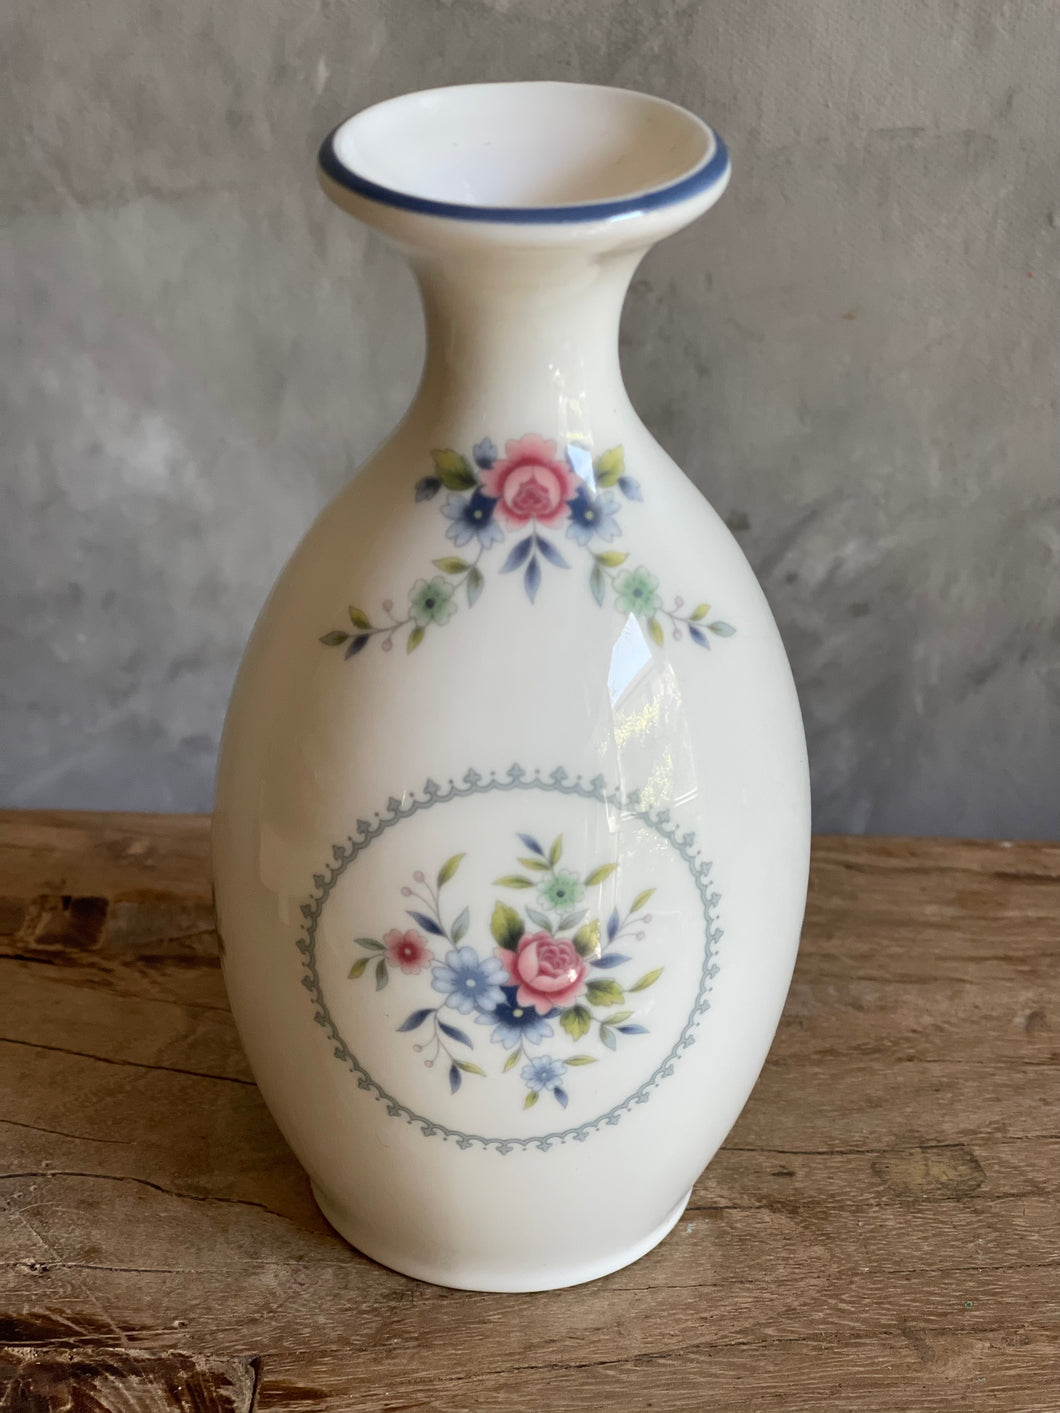 Vintage Wedgwood “Rosedale” Bud Vase - Made In England.